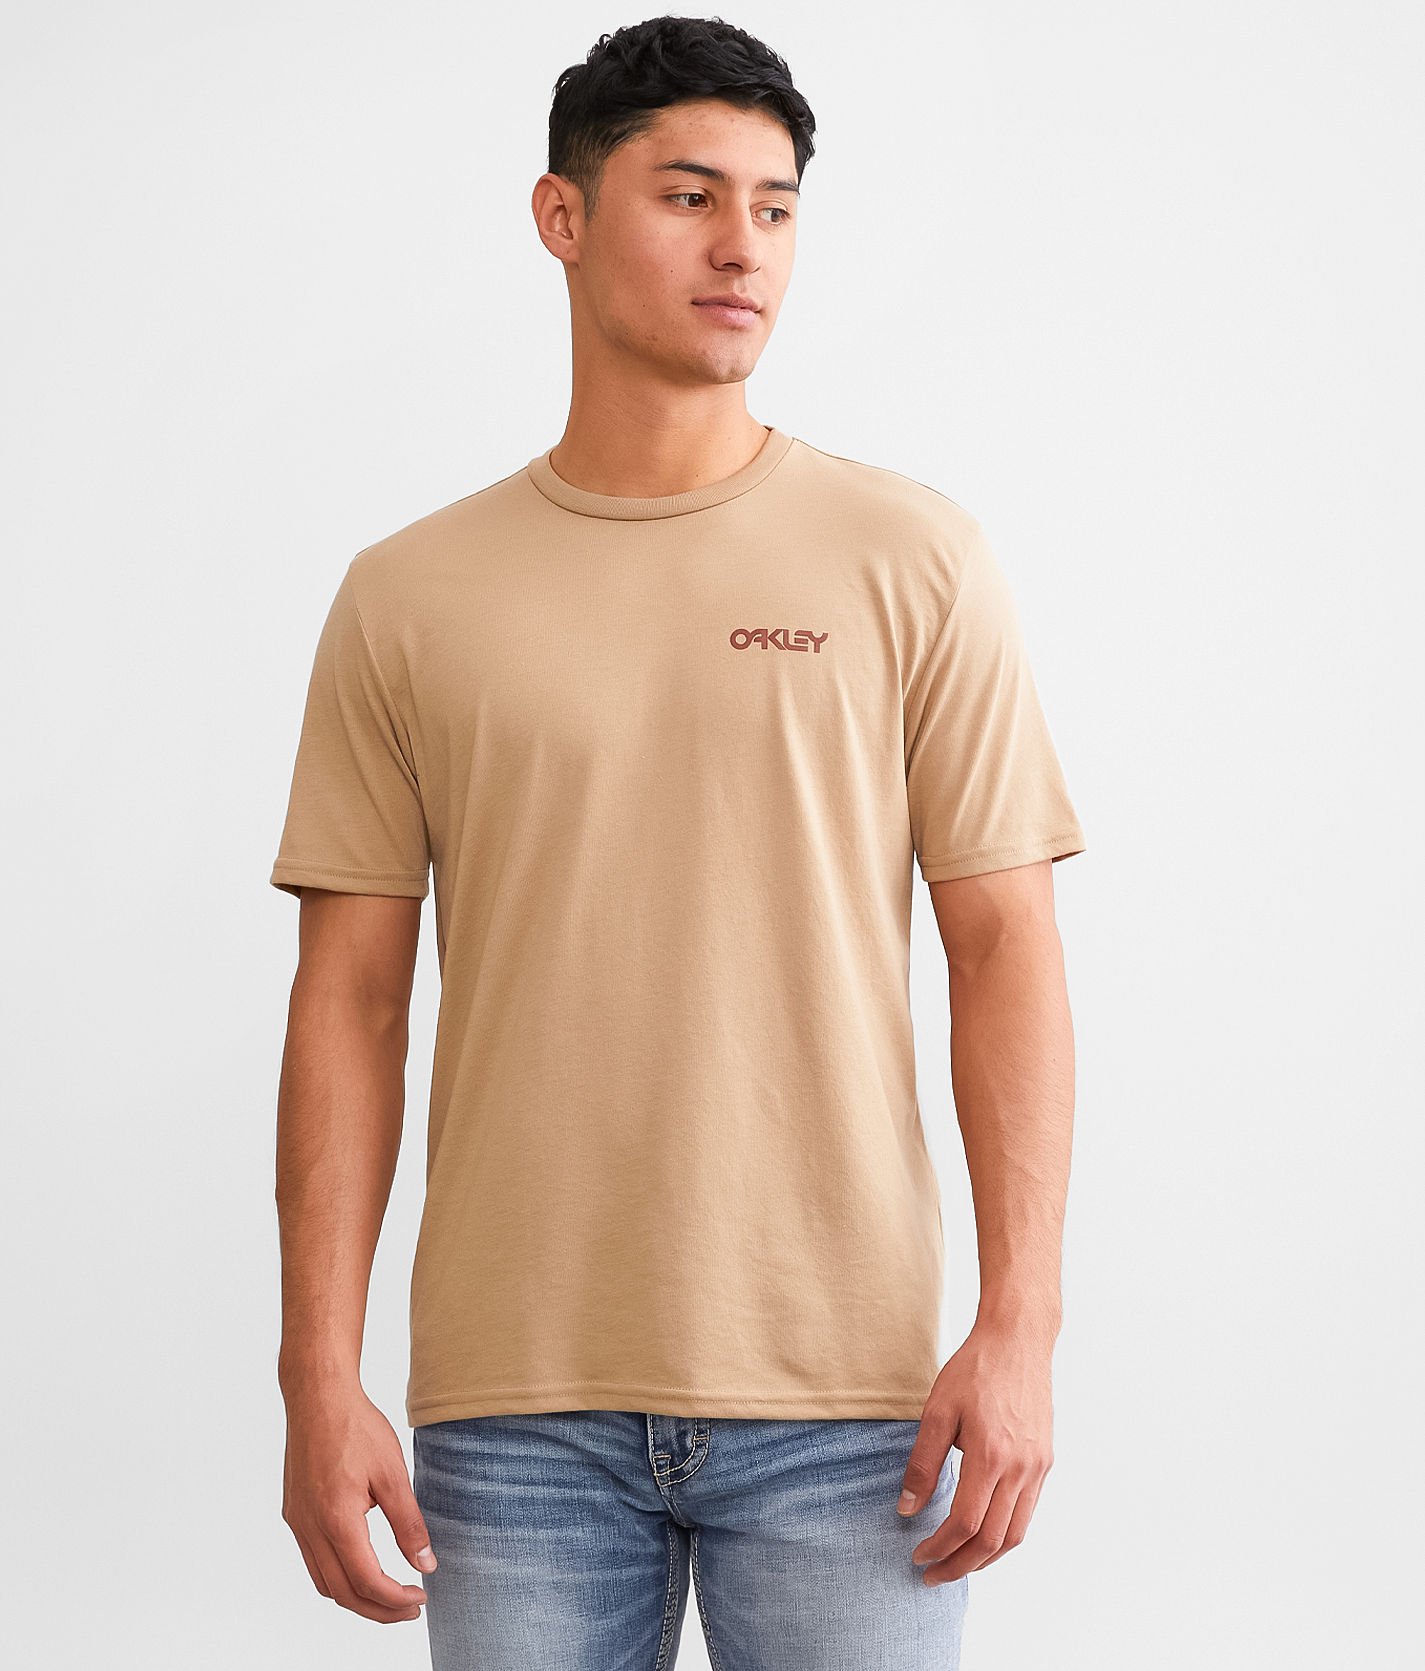 Oakley 50-Brite T-Shirt - Men's T-Shirts, Buckle